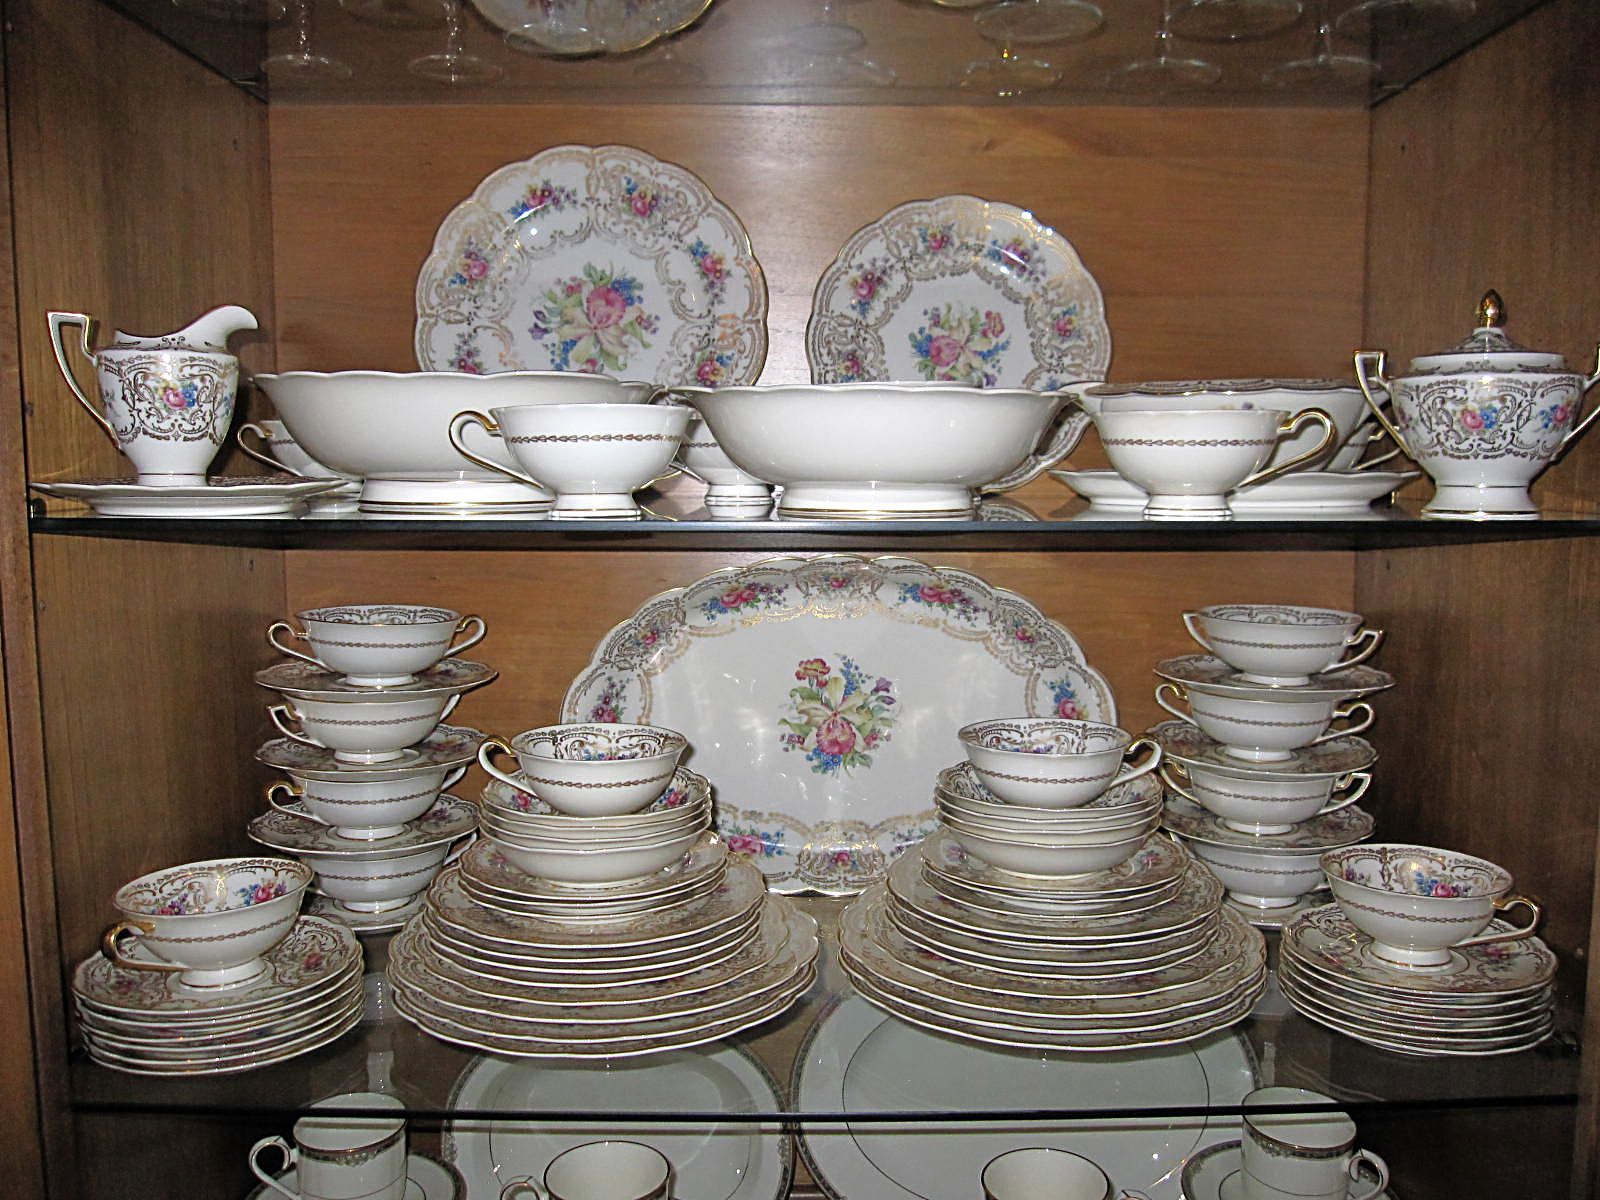 Porcelain China Tea Set in Victorian Rose P
attern